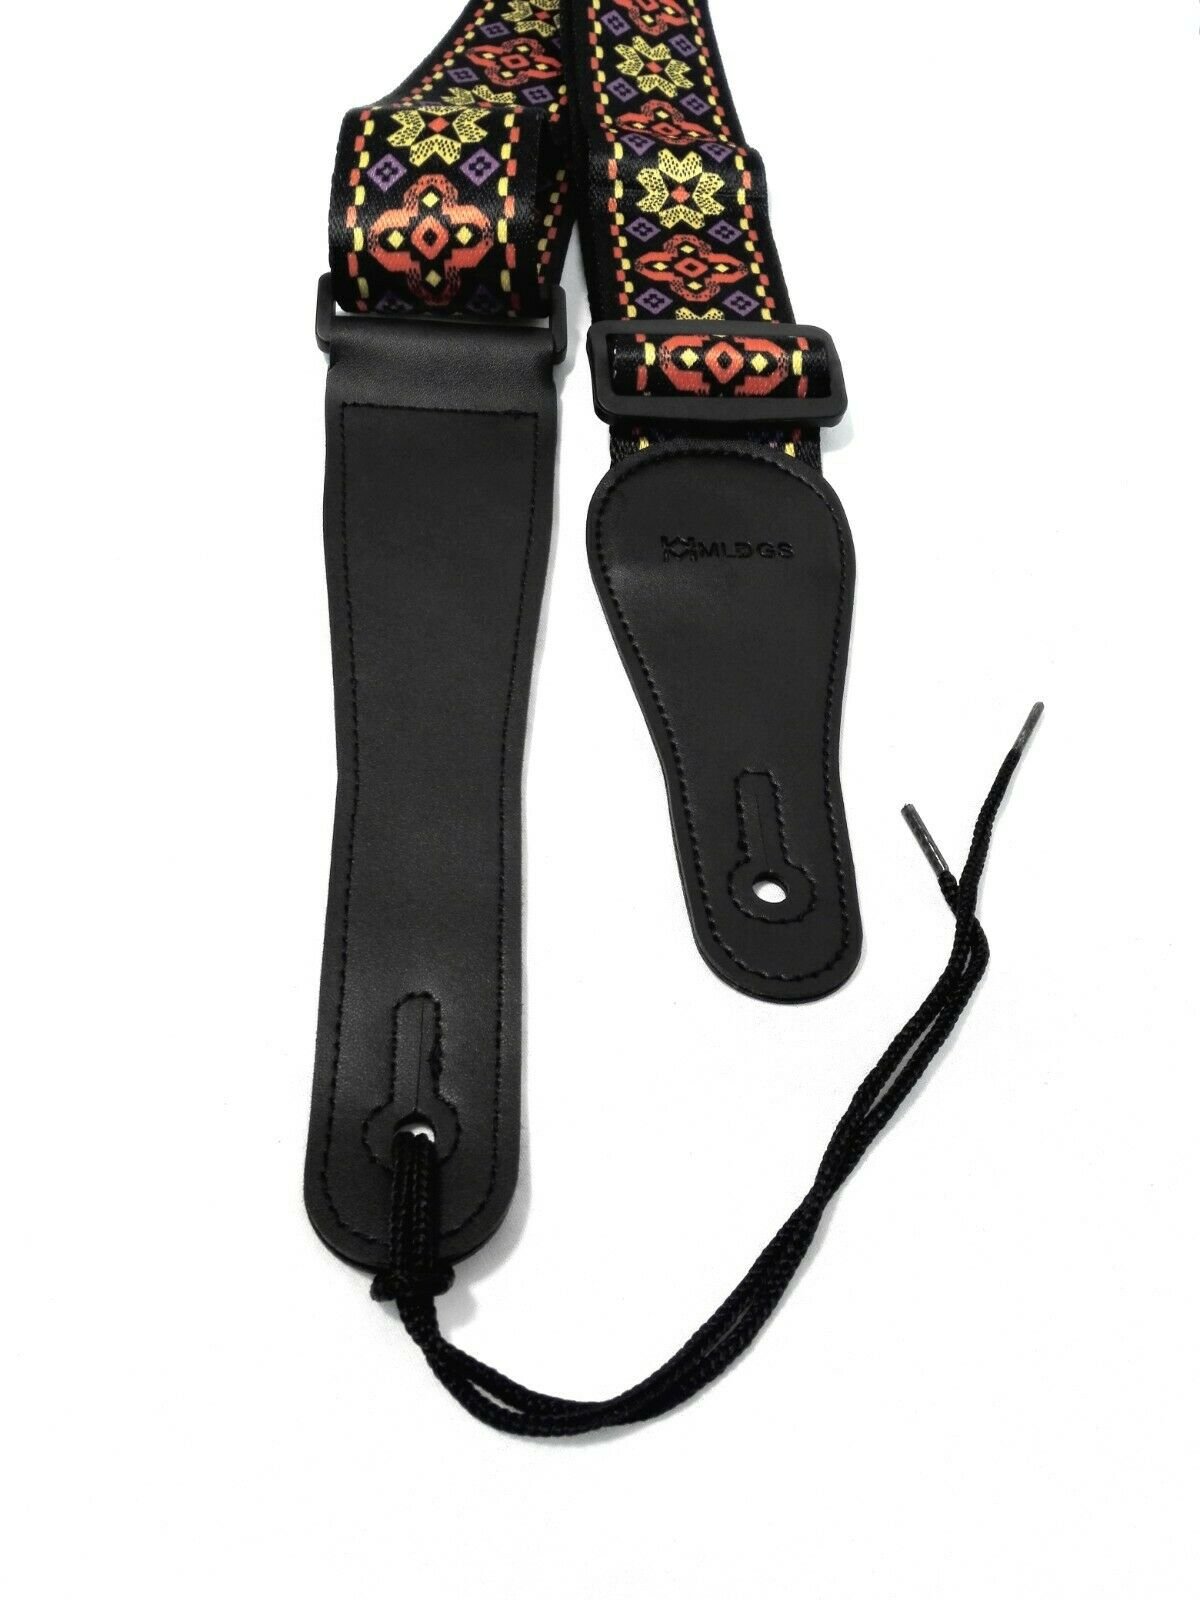 Long PU Leather End Guitar Strap,Length Adjustable 103~170cm. "Flowers"